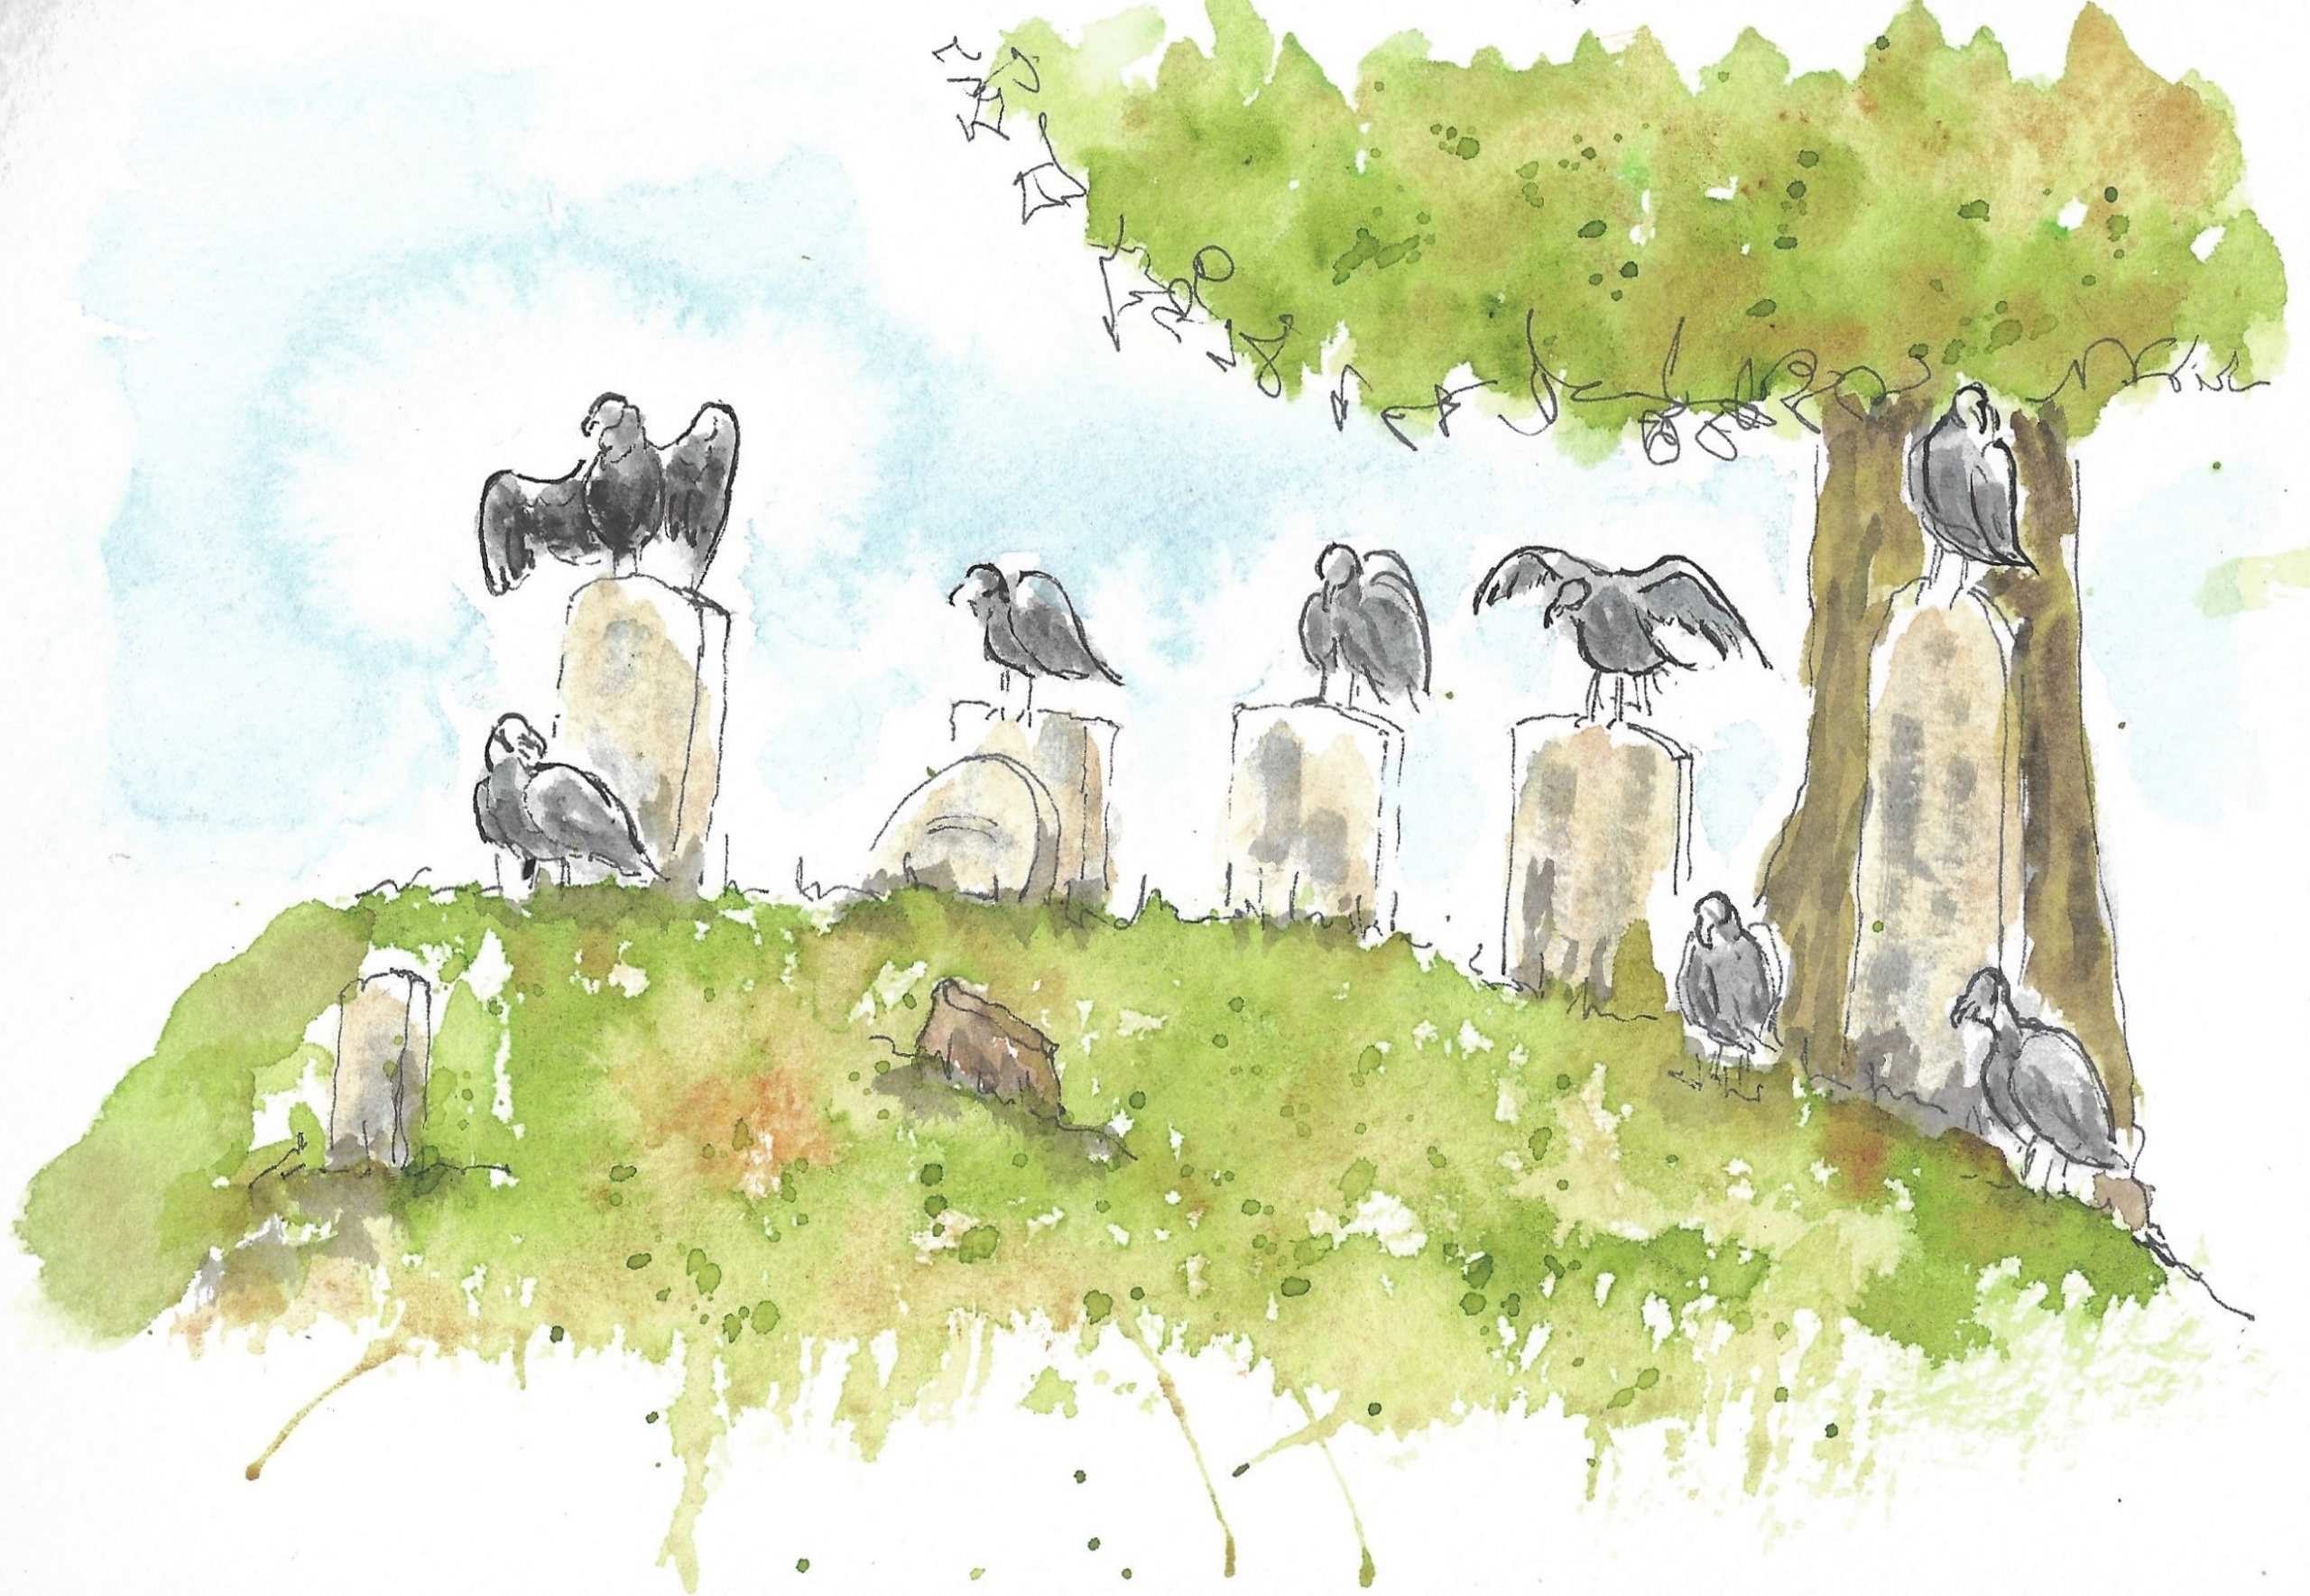 Turkey vultures in cemetery